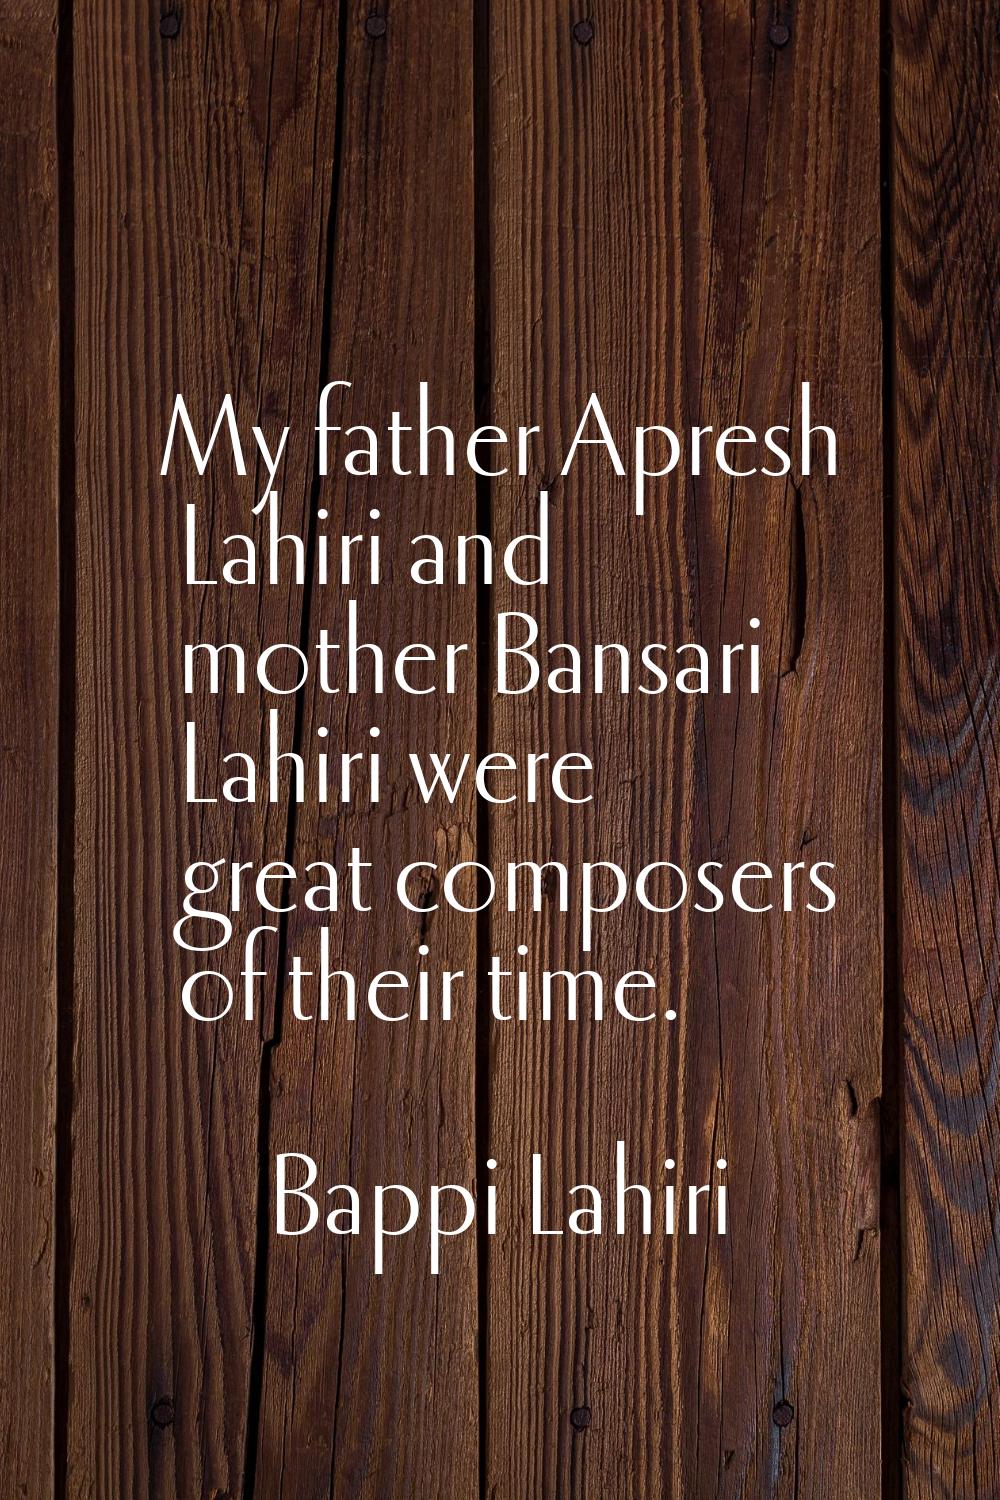 My father Apresh Lahiri and mother Bansari Lahiri were great composers of their time.